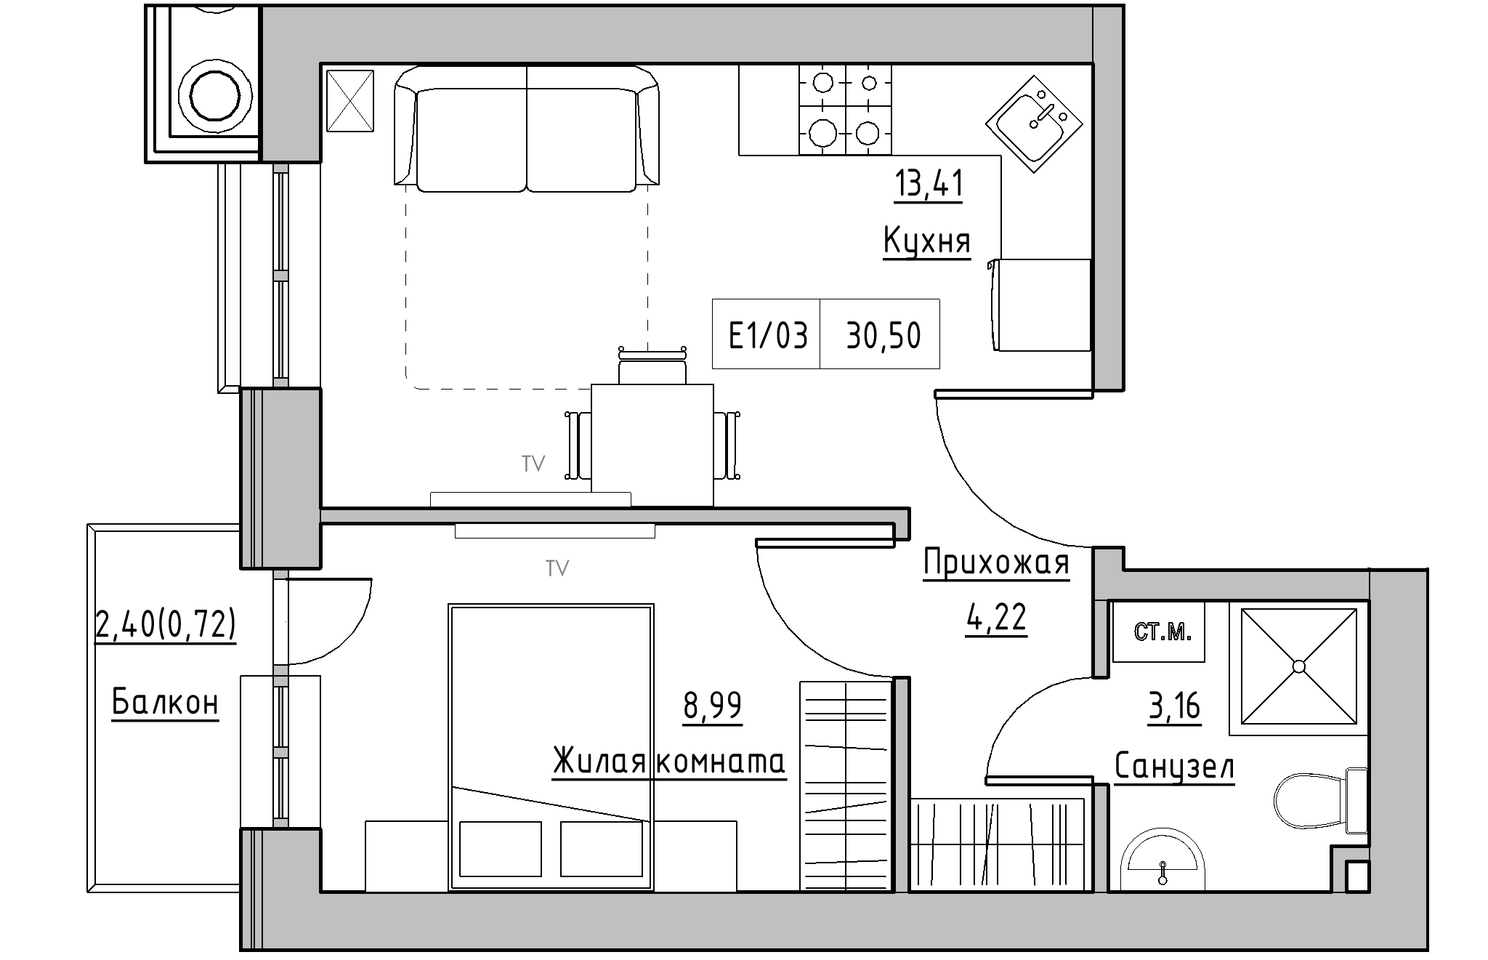 Planning 1-rm flats area 30.5m2, KS-010-03/0012.